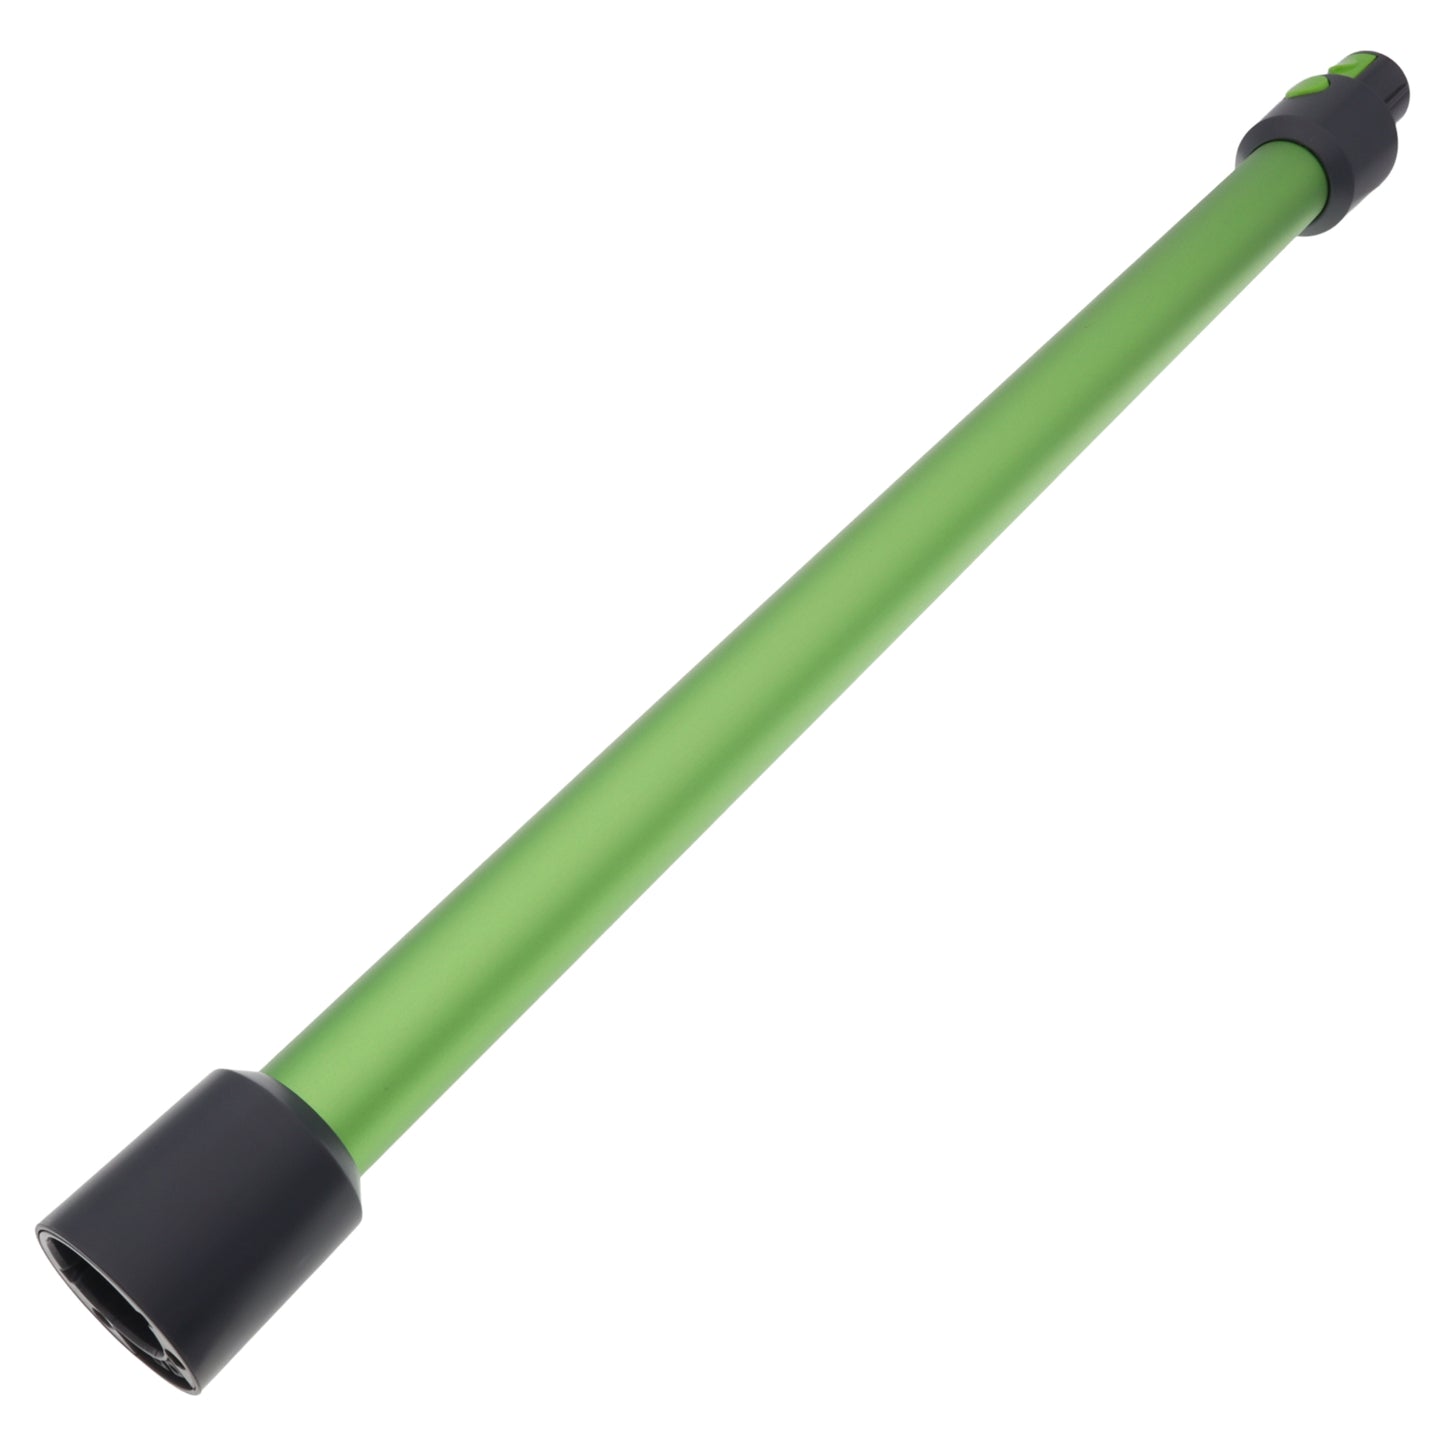 Polti tubo rigido prolunga verde scopa aspirapolvere Forzaspira D-Power SR500